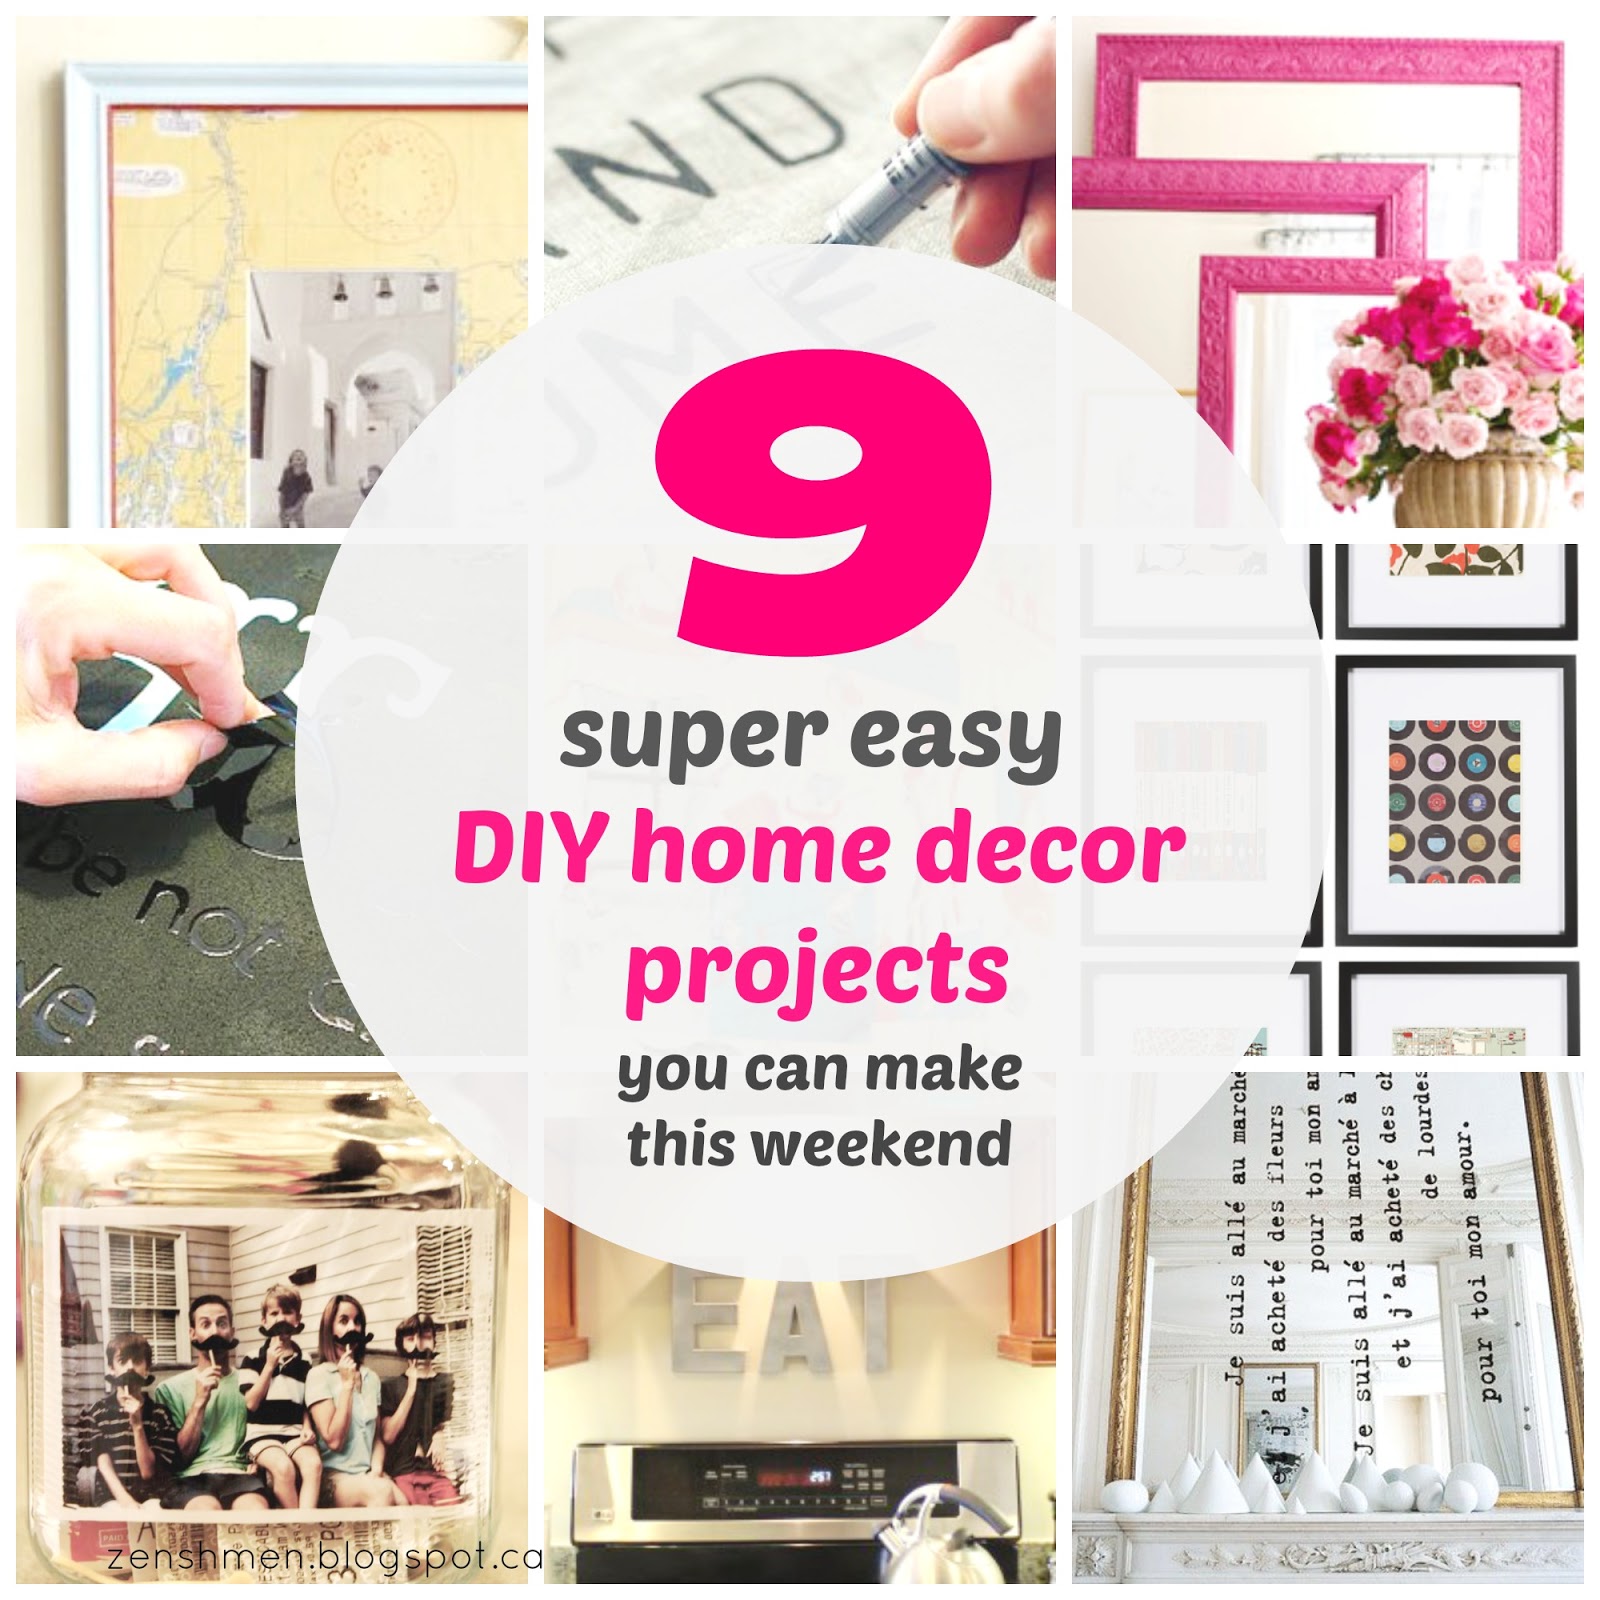 zen shmen!: 9 Super Easy DIY Home Decor Projects You Can ...